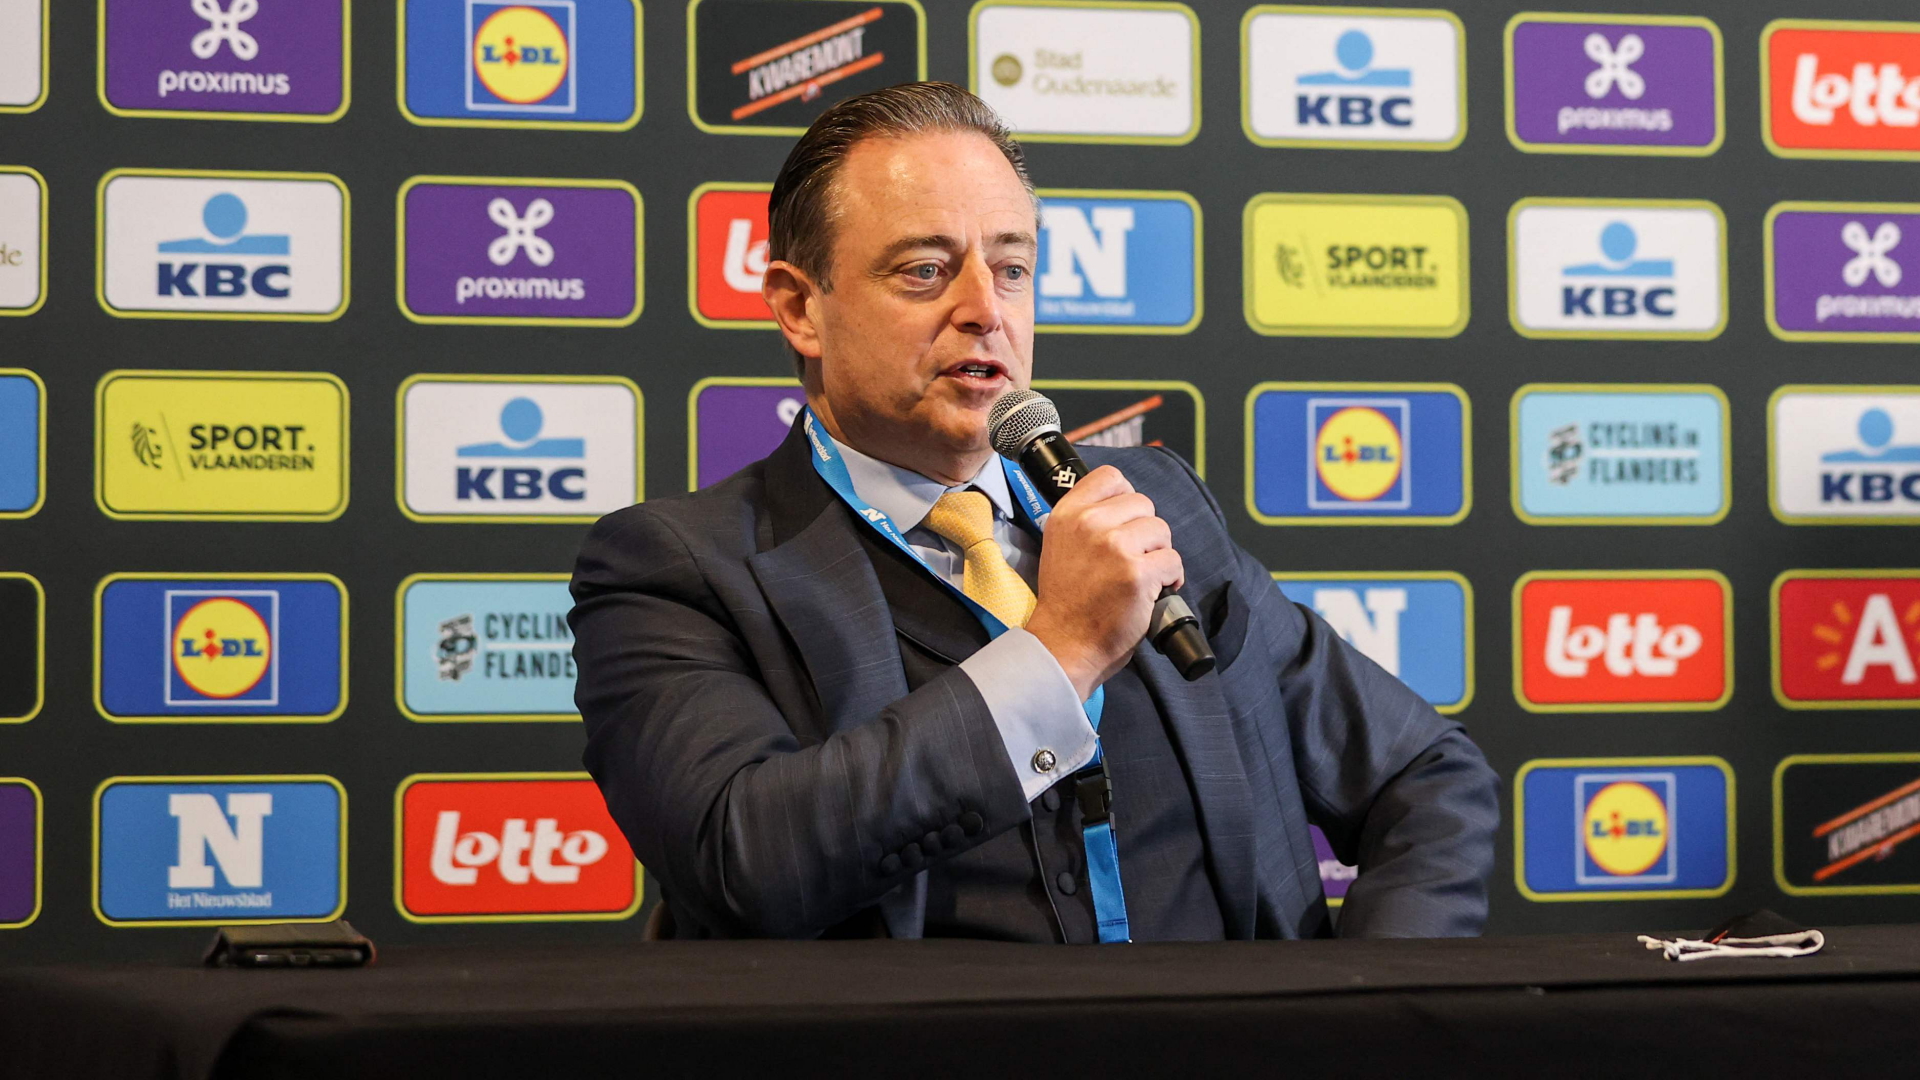 Bart De Wever bei einer Pressekonferenz zur "Tour des Flandres". | AFP